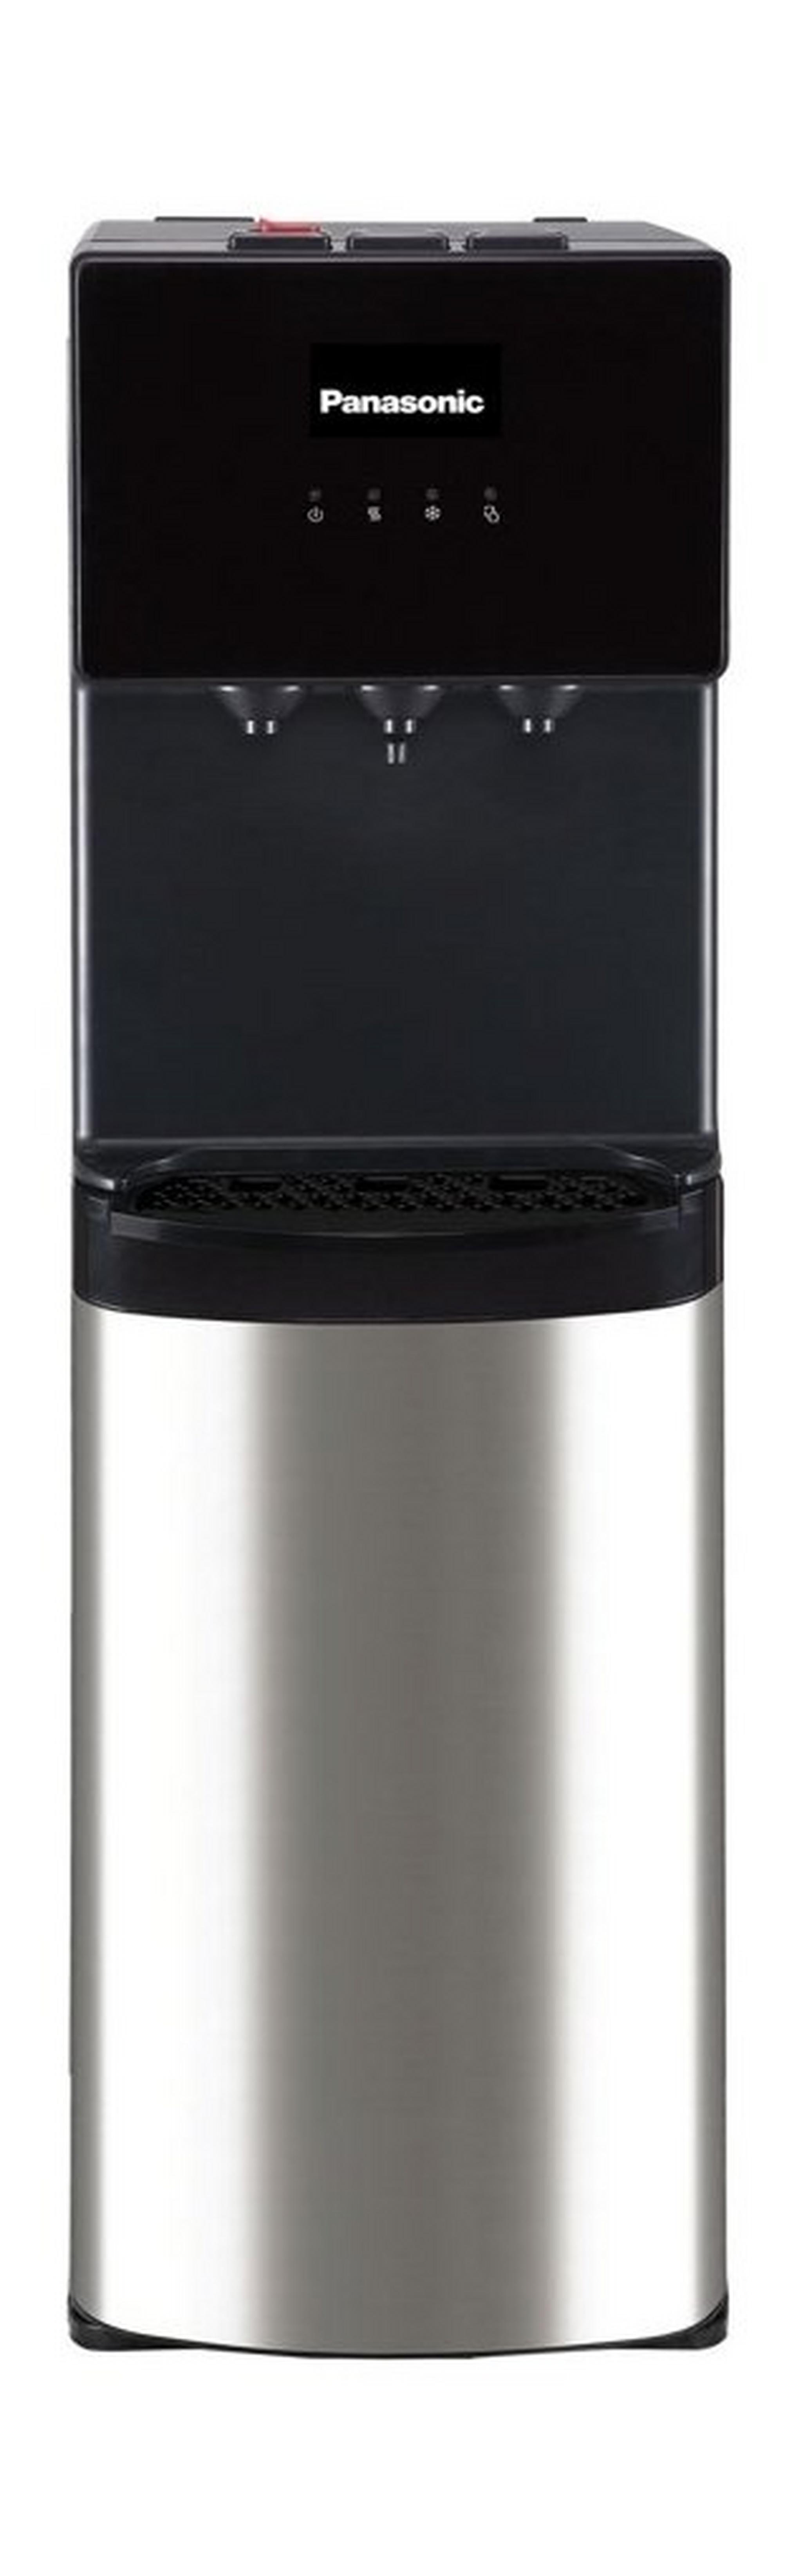 Panasonic Sleek Bottom Load Water Dispenser, 20 Liters, SDMWD3438BG - Black